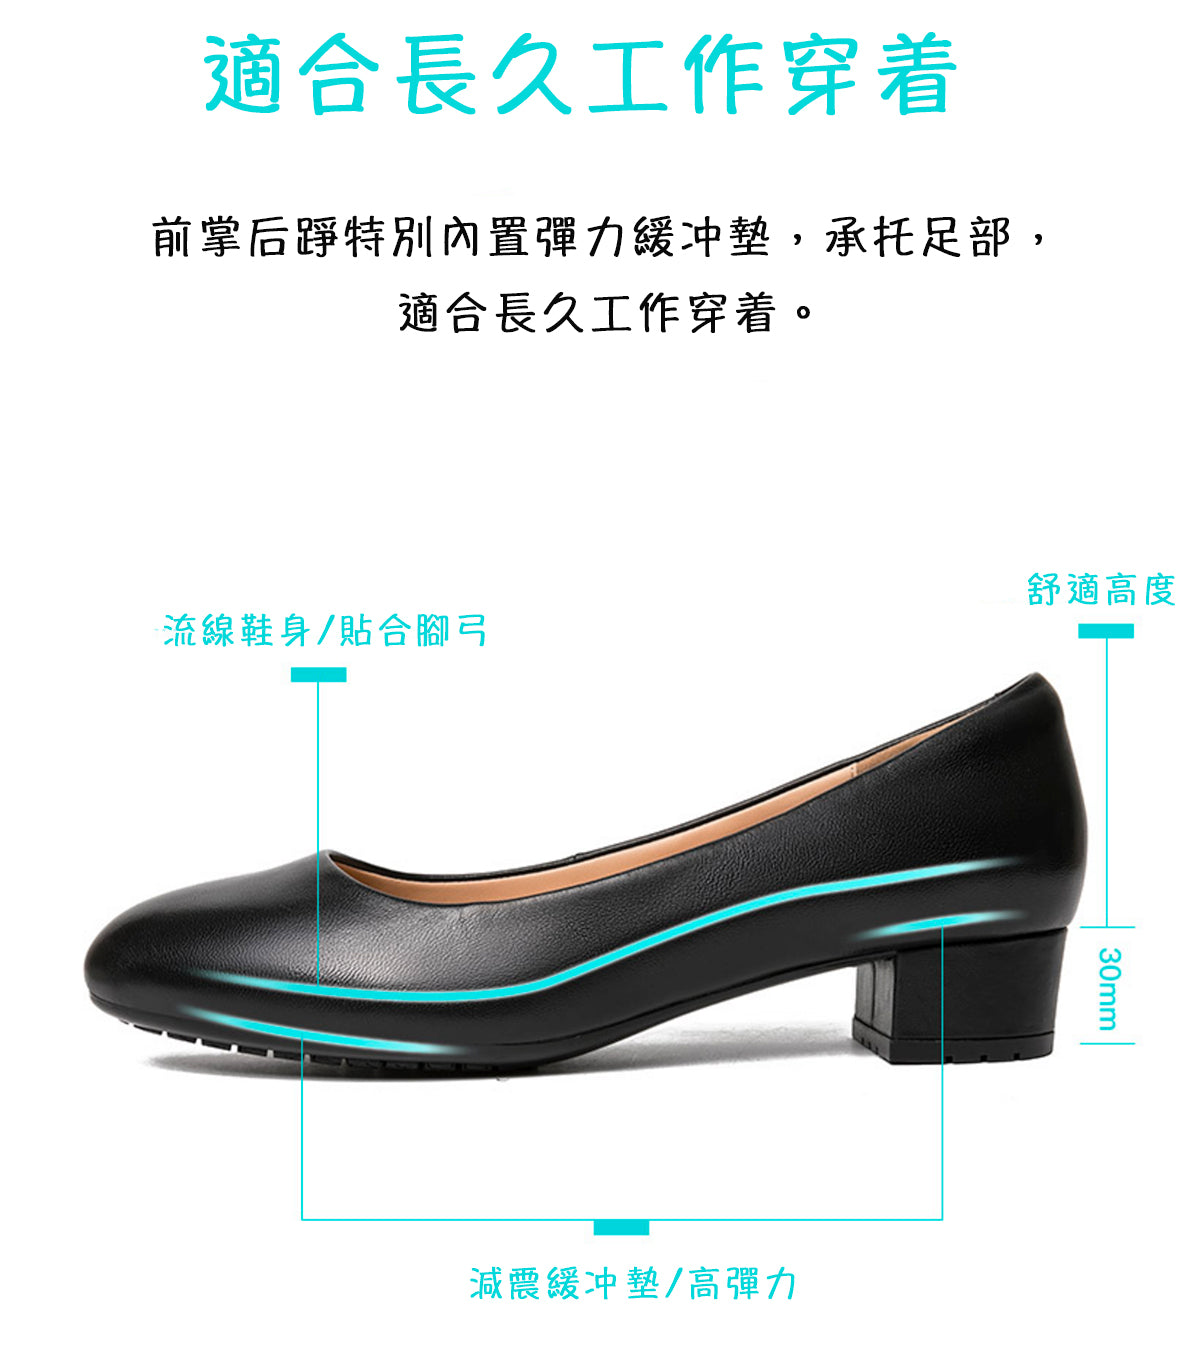 Ladies's Round Toe High Chunky Heel Work Shoes (5CM)